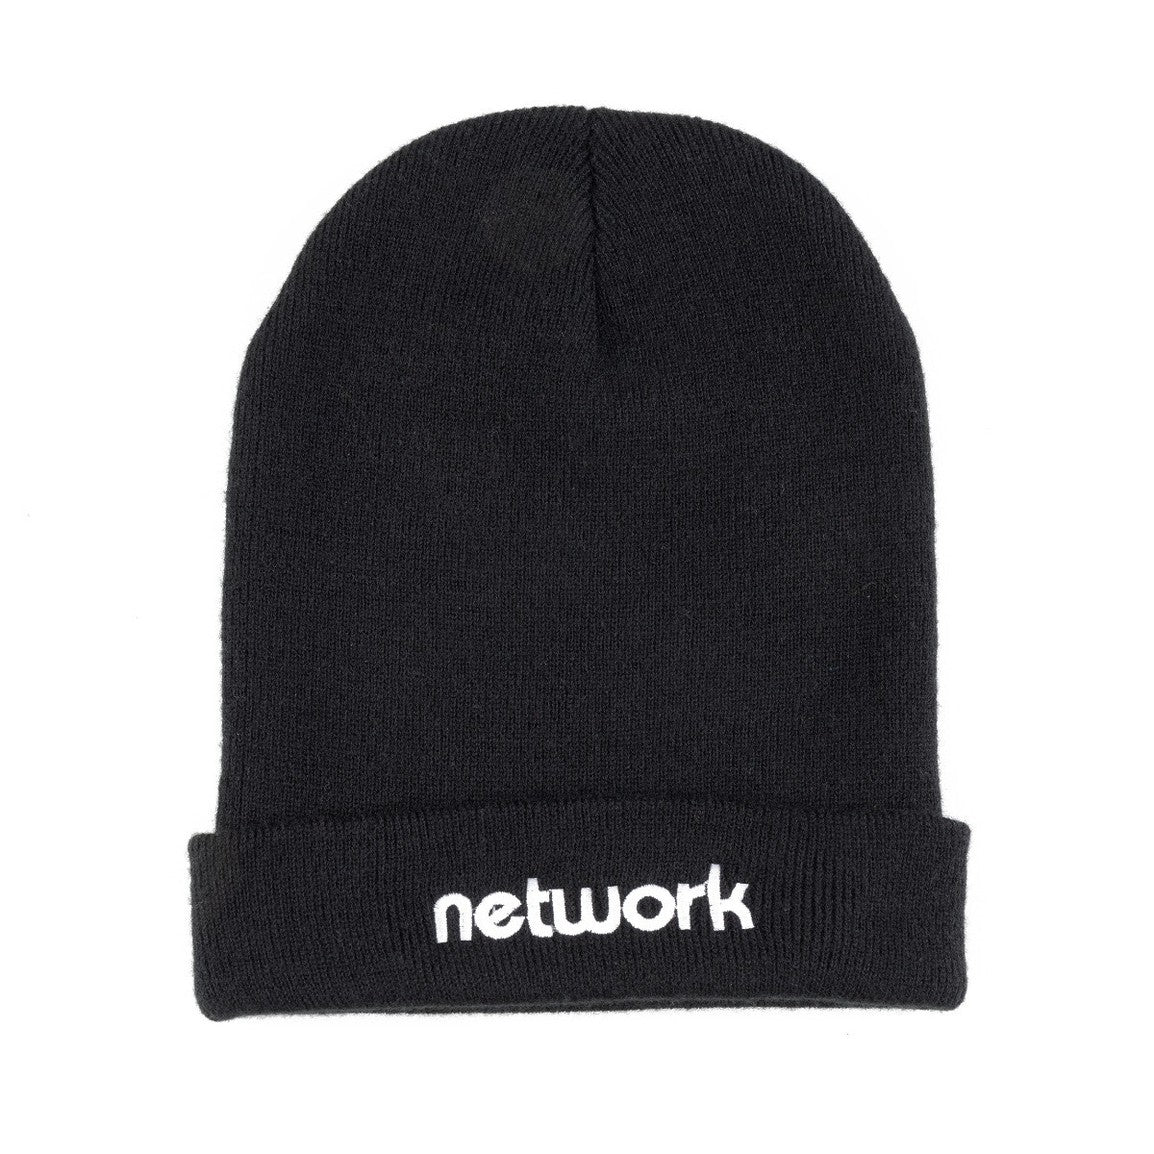 Network Adult Cuffed Beanie / Hat